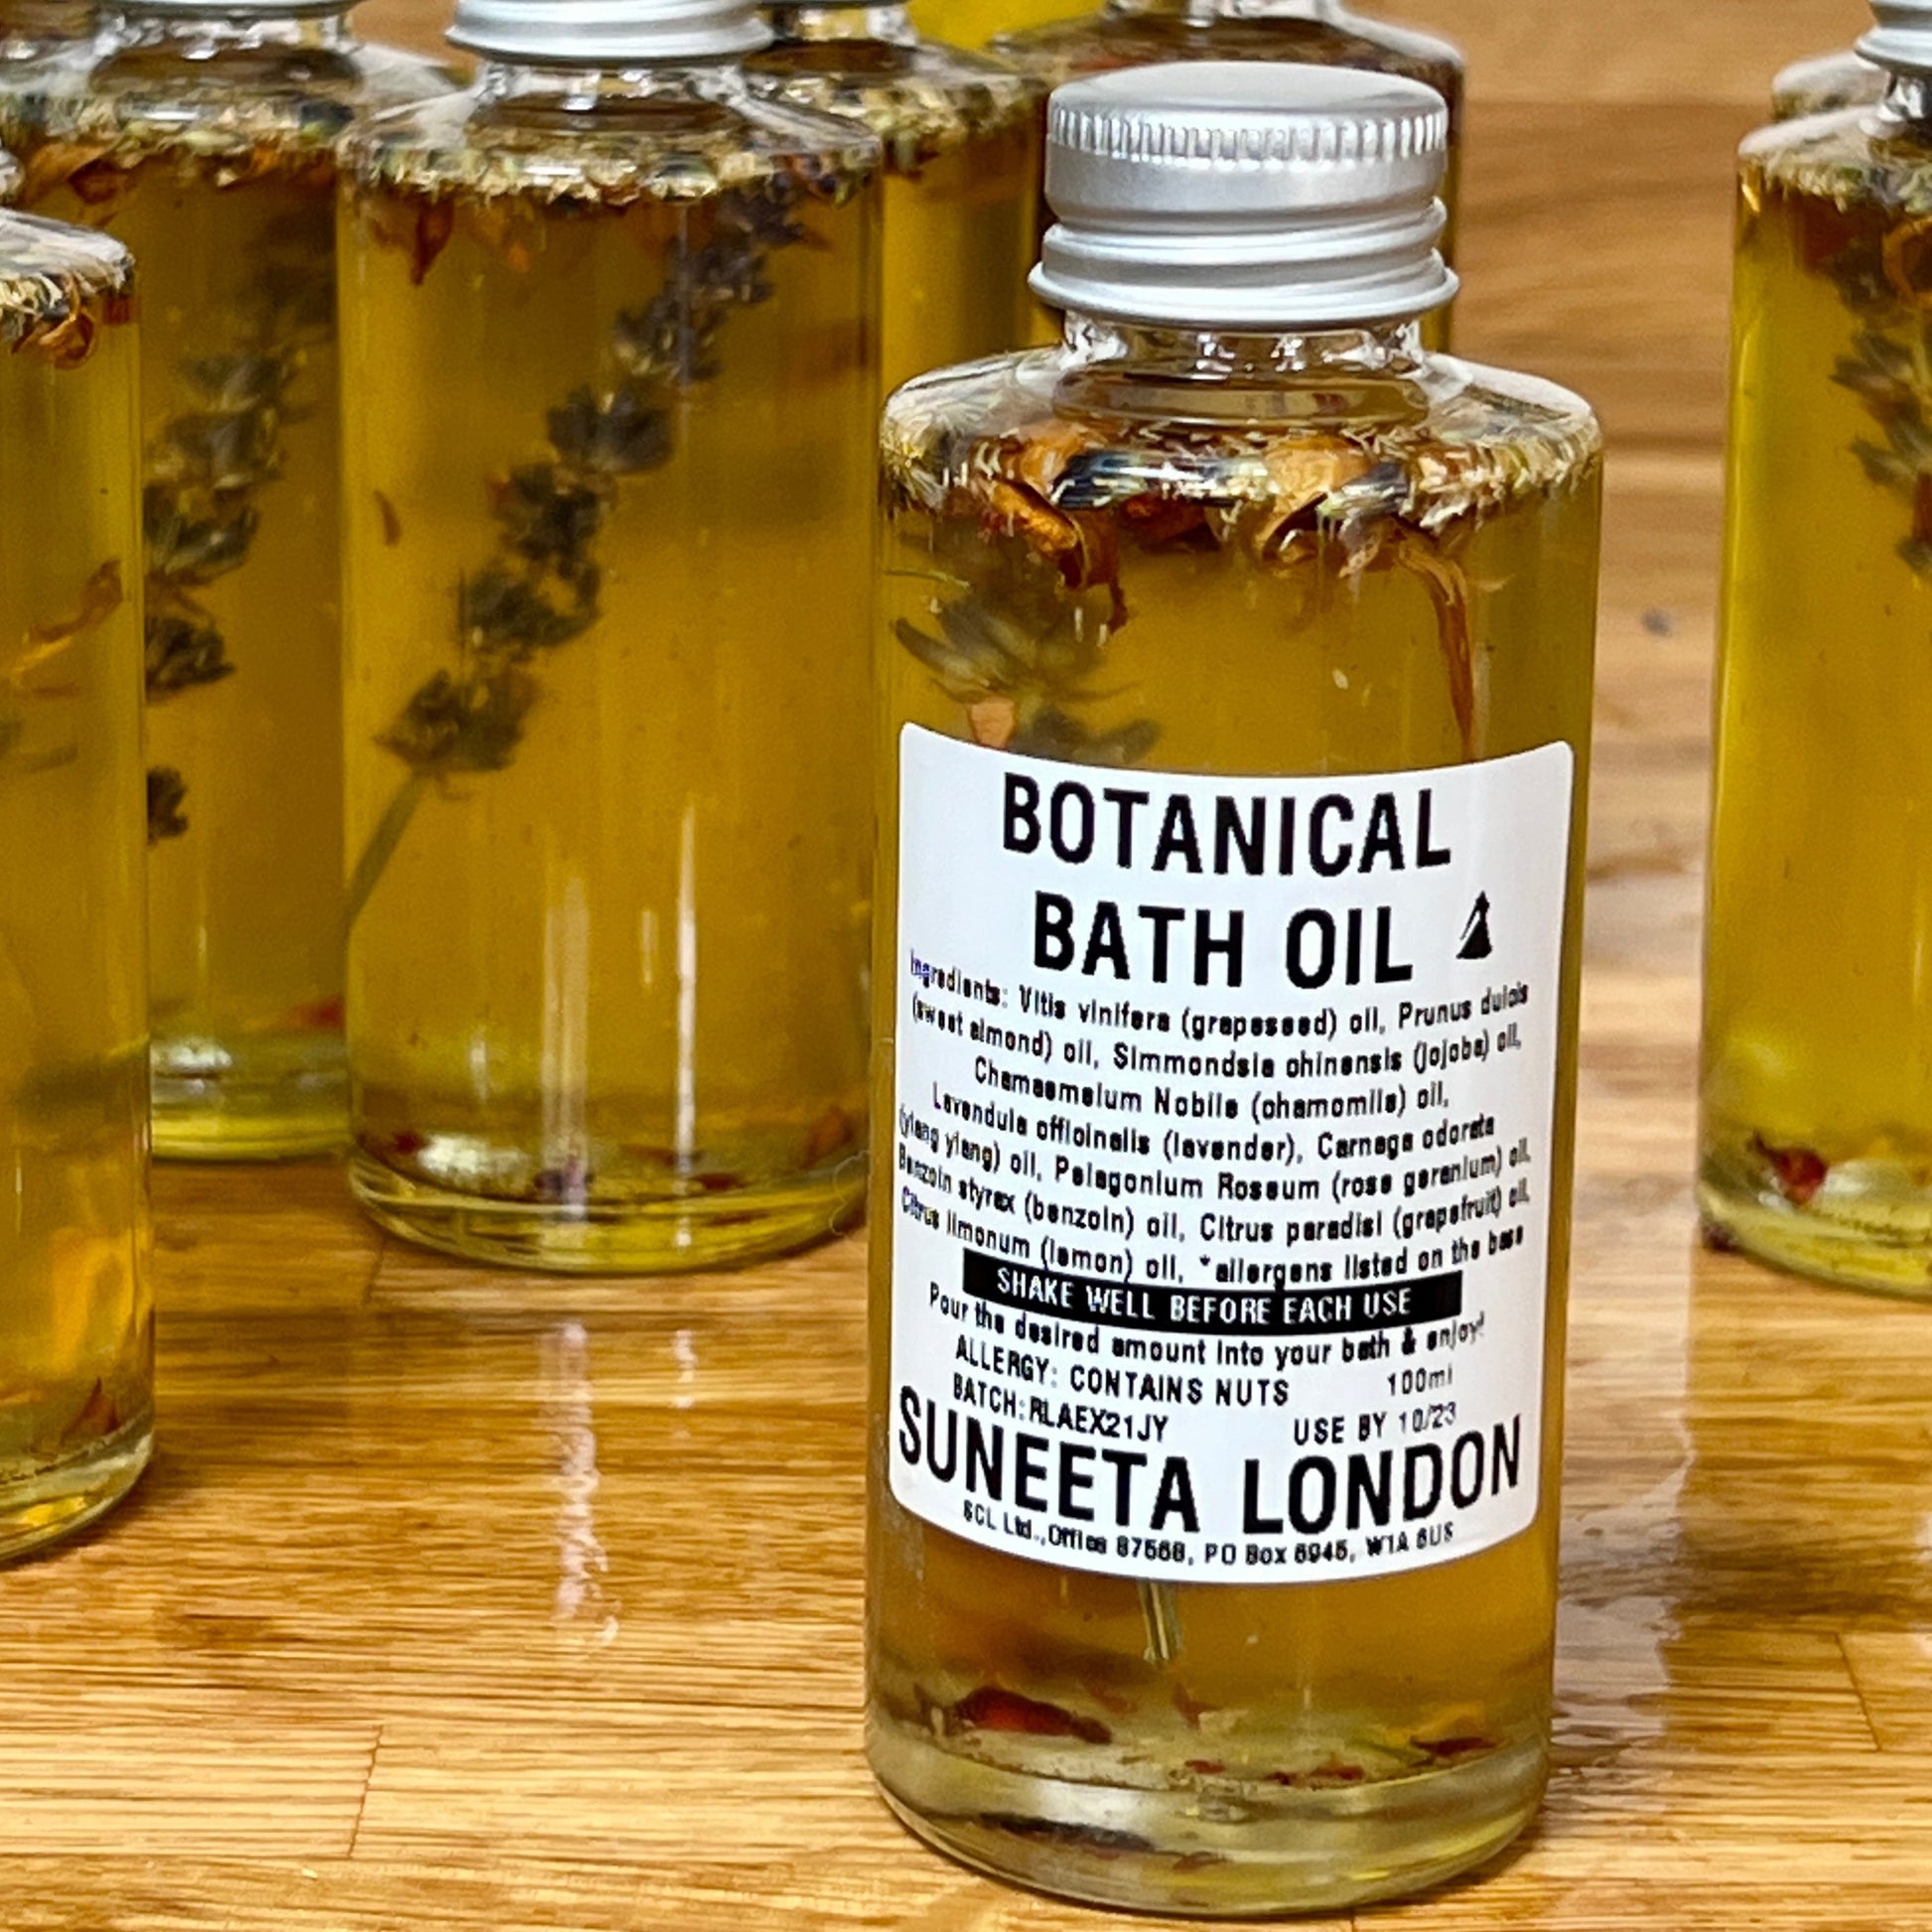 bath oil, Suneeta London, botanical bath oil